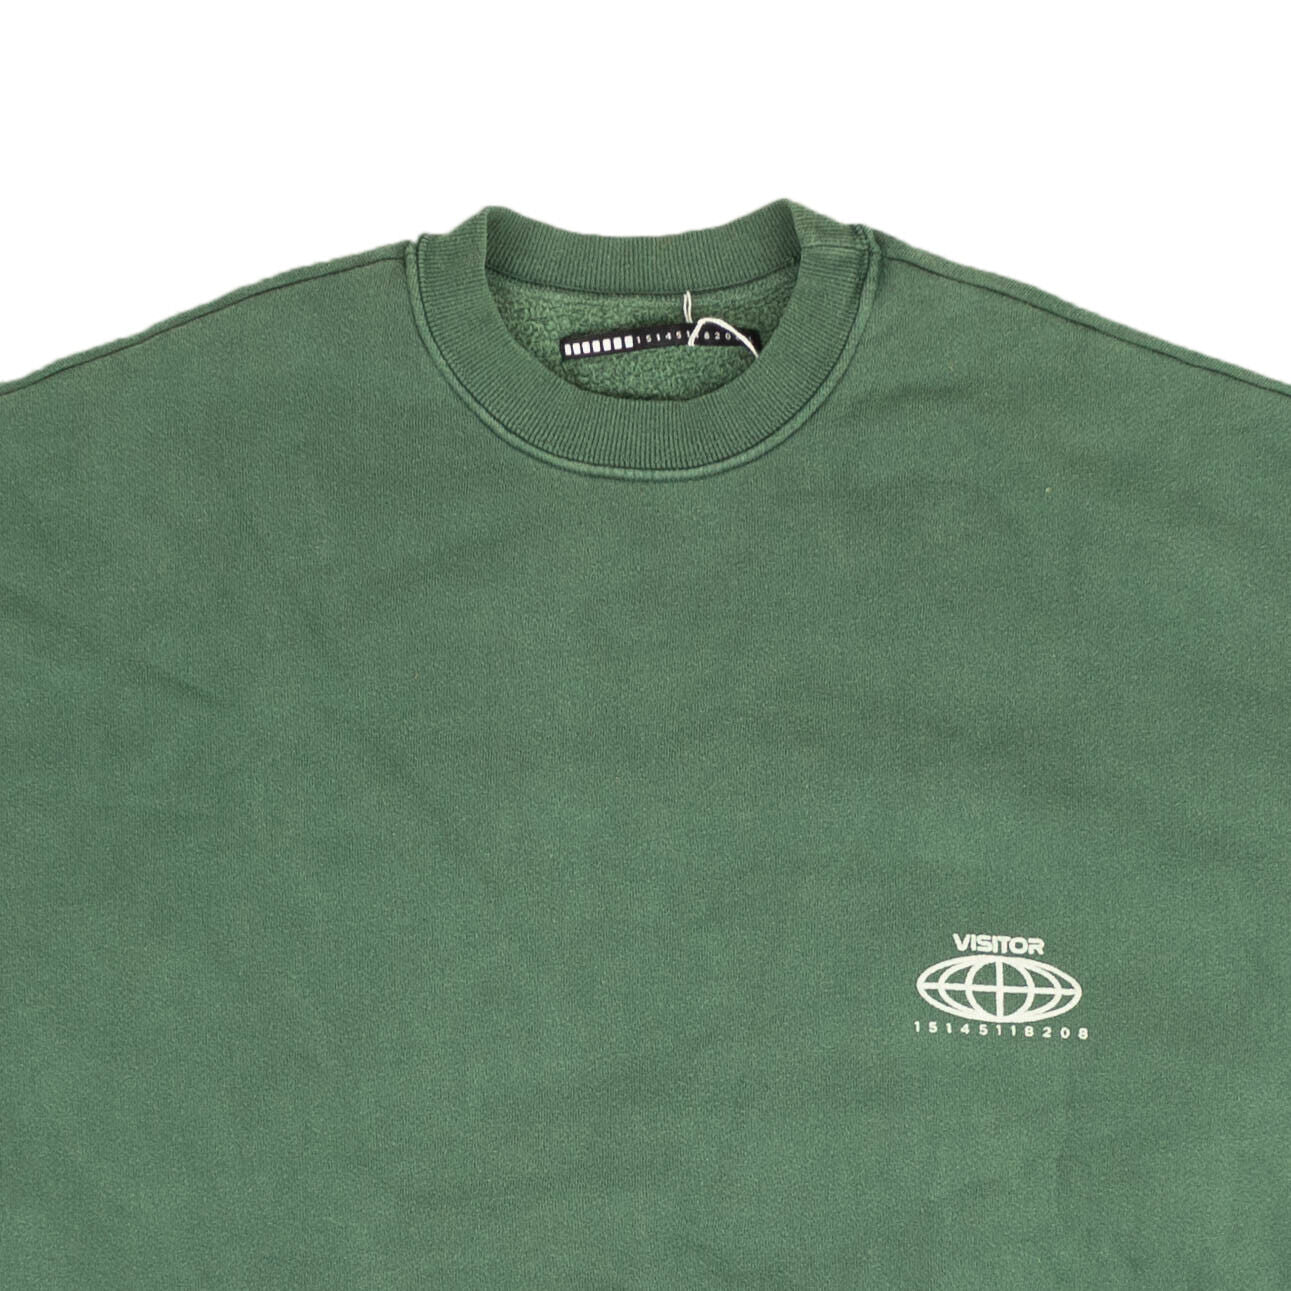 Visitor On Earth Crew Sweatshirt - Green